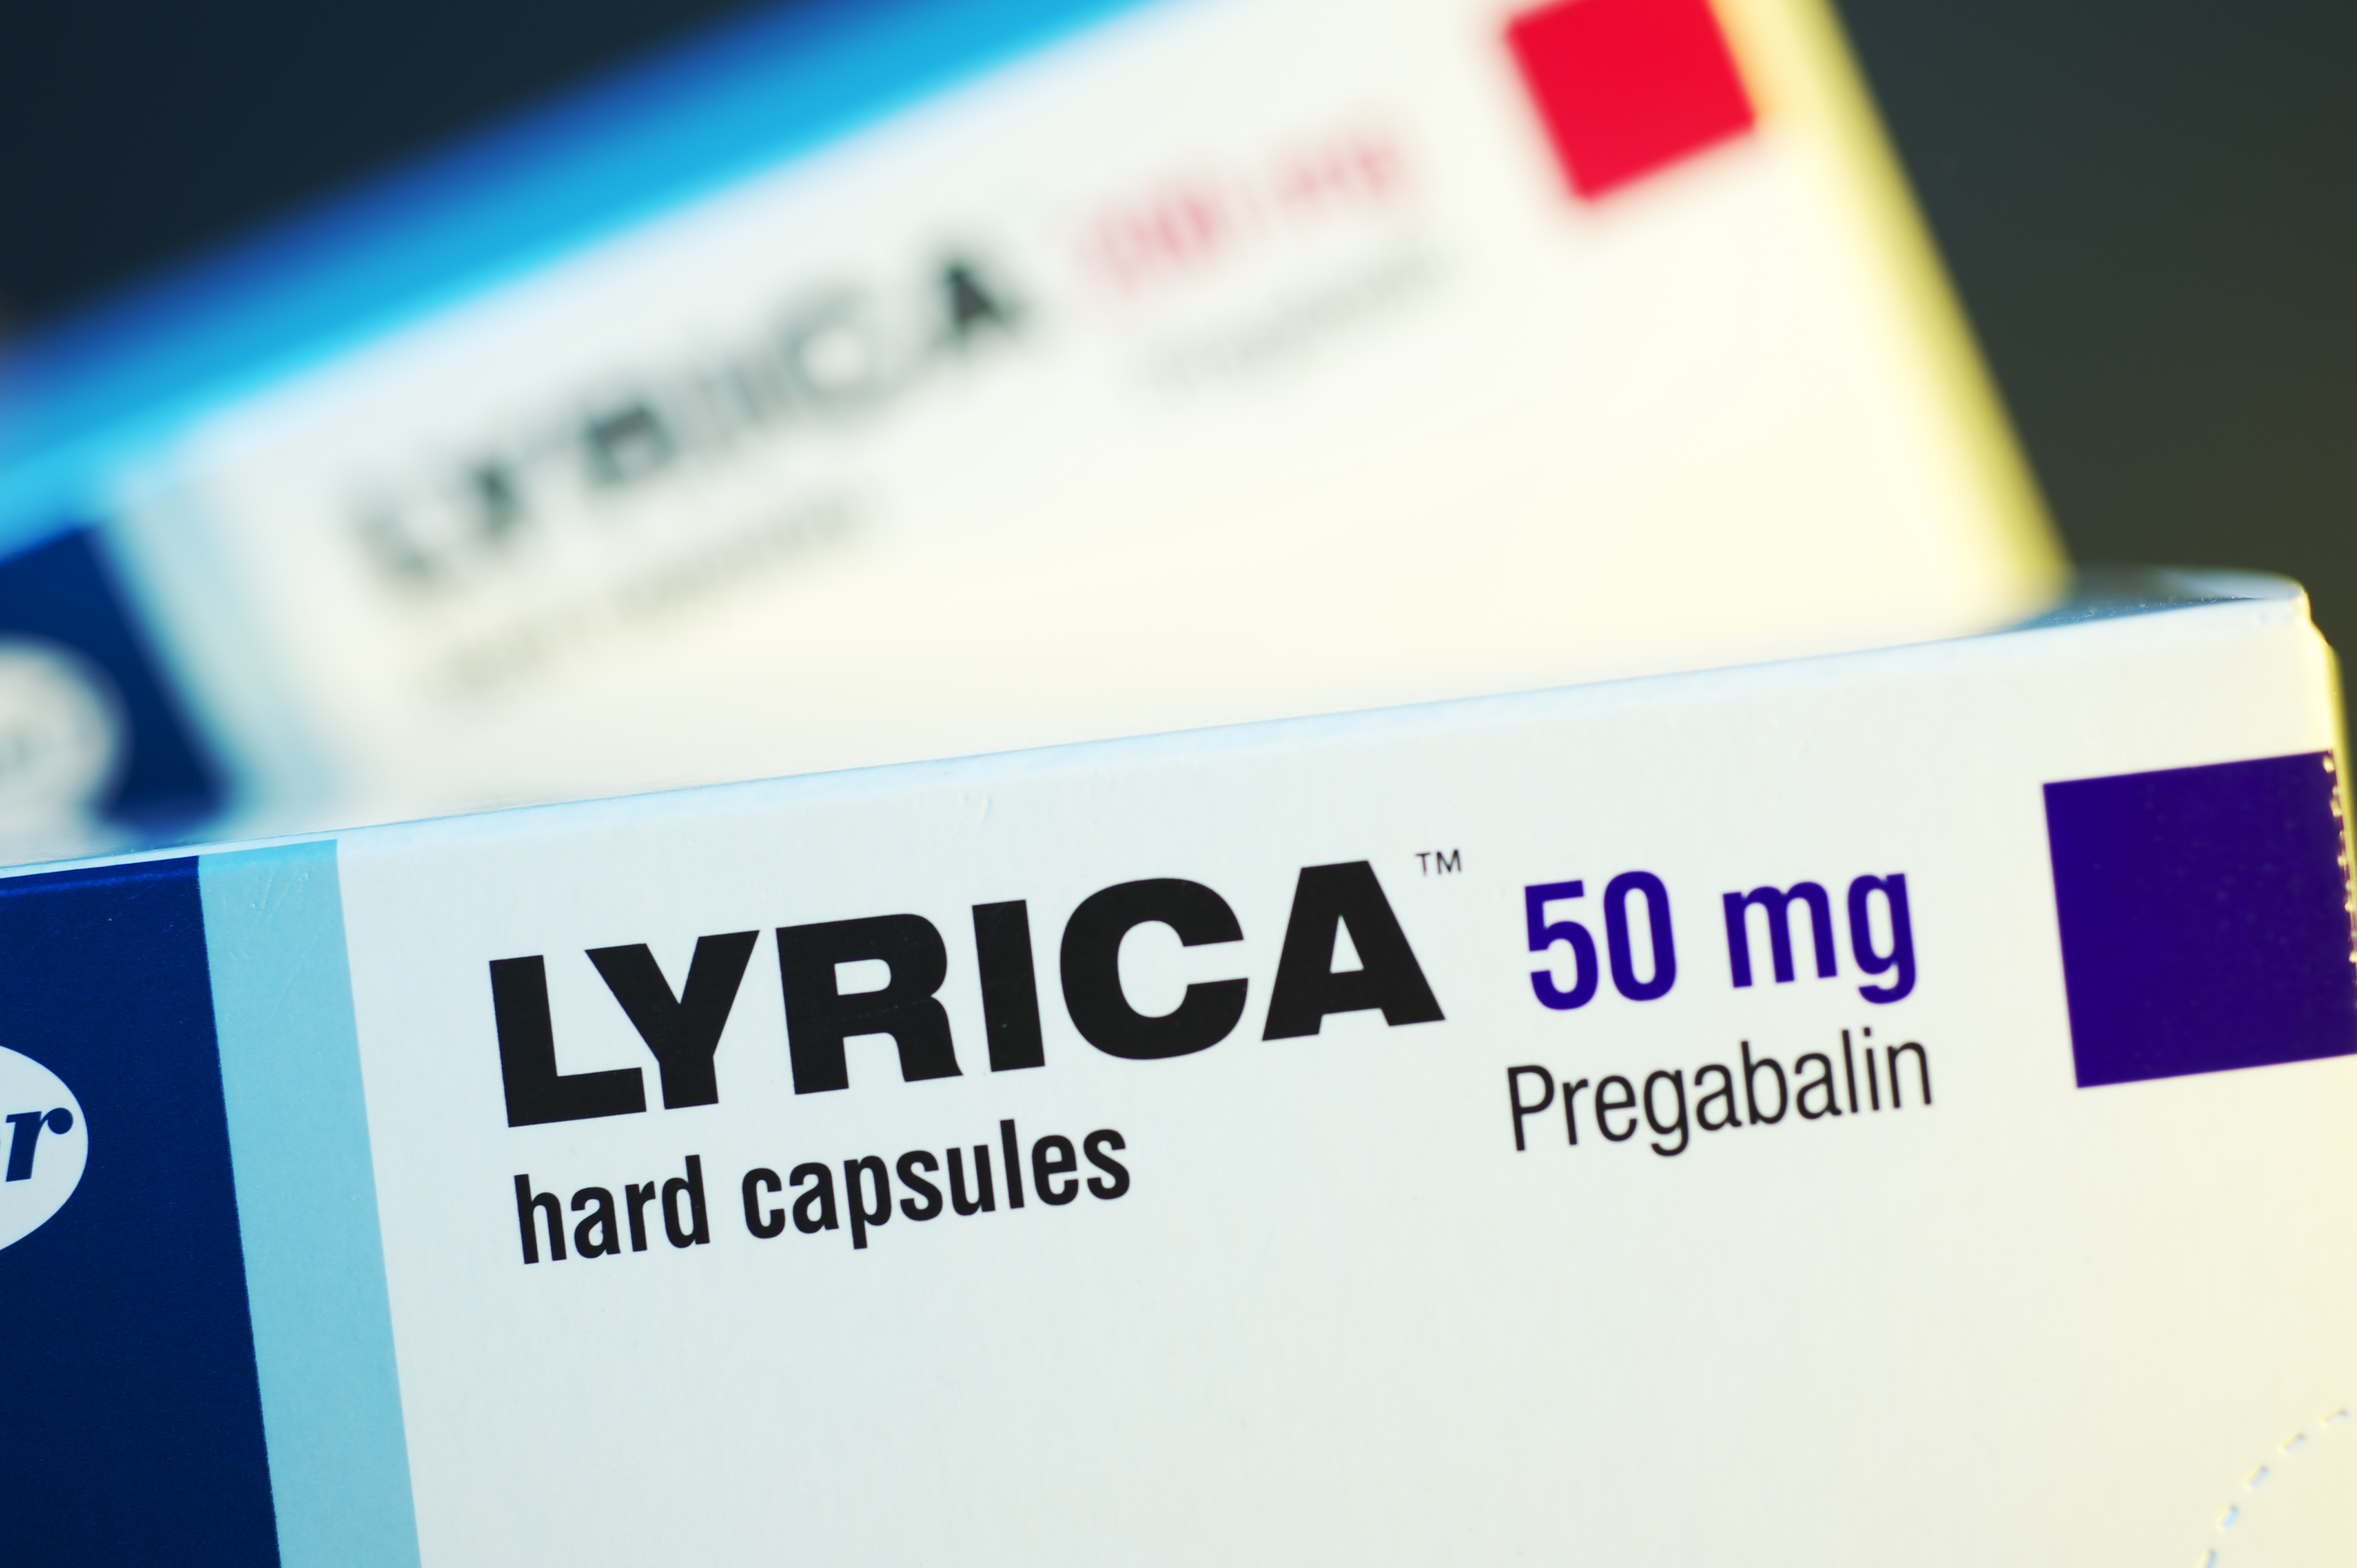 Lyrica - drugs – tablets – pregablin – online